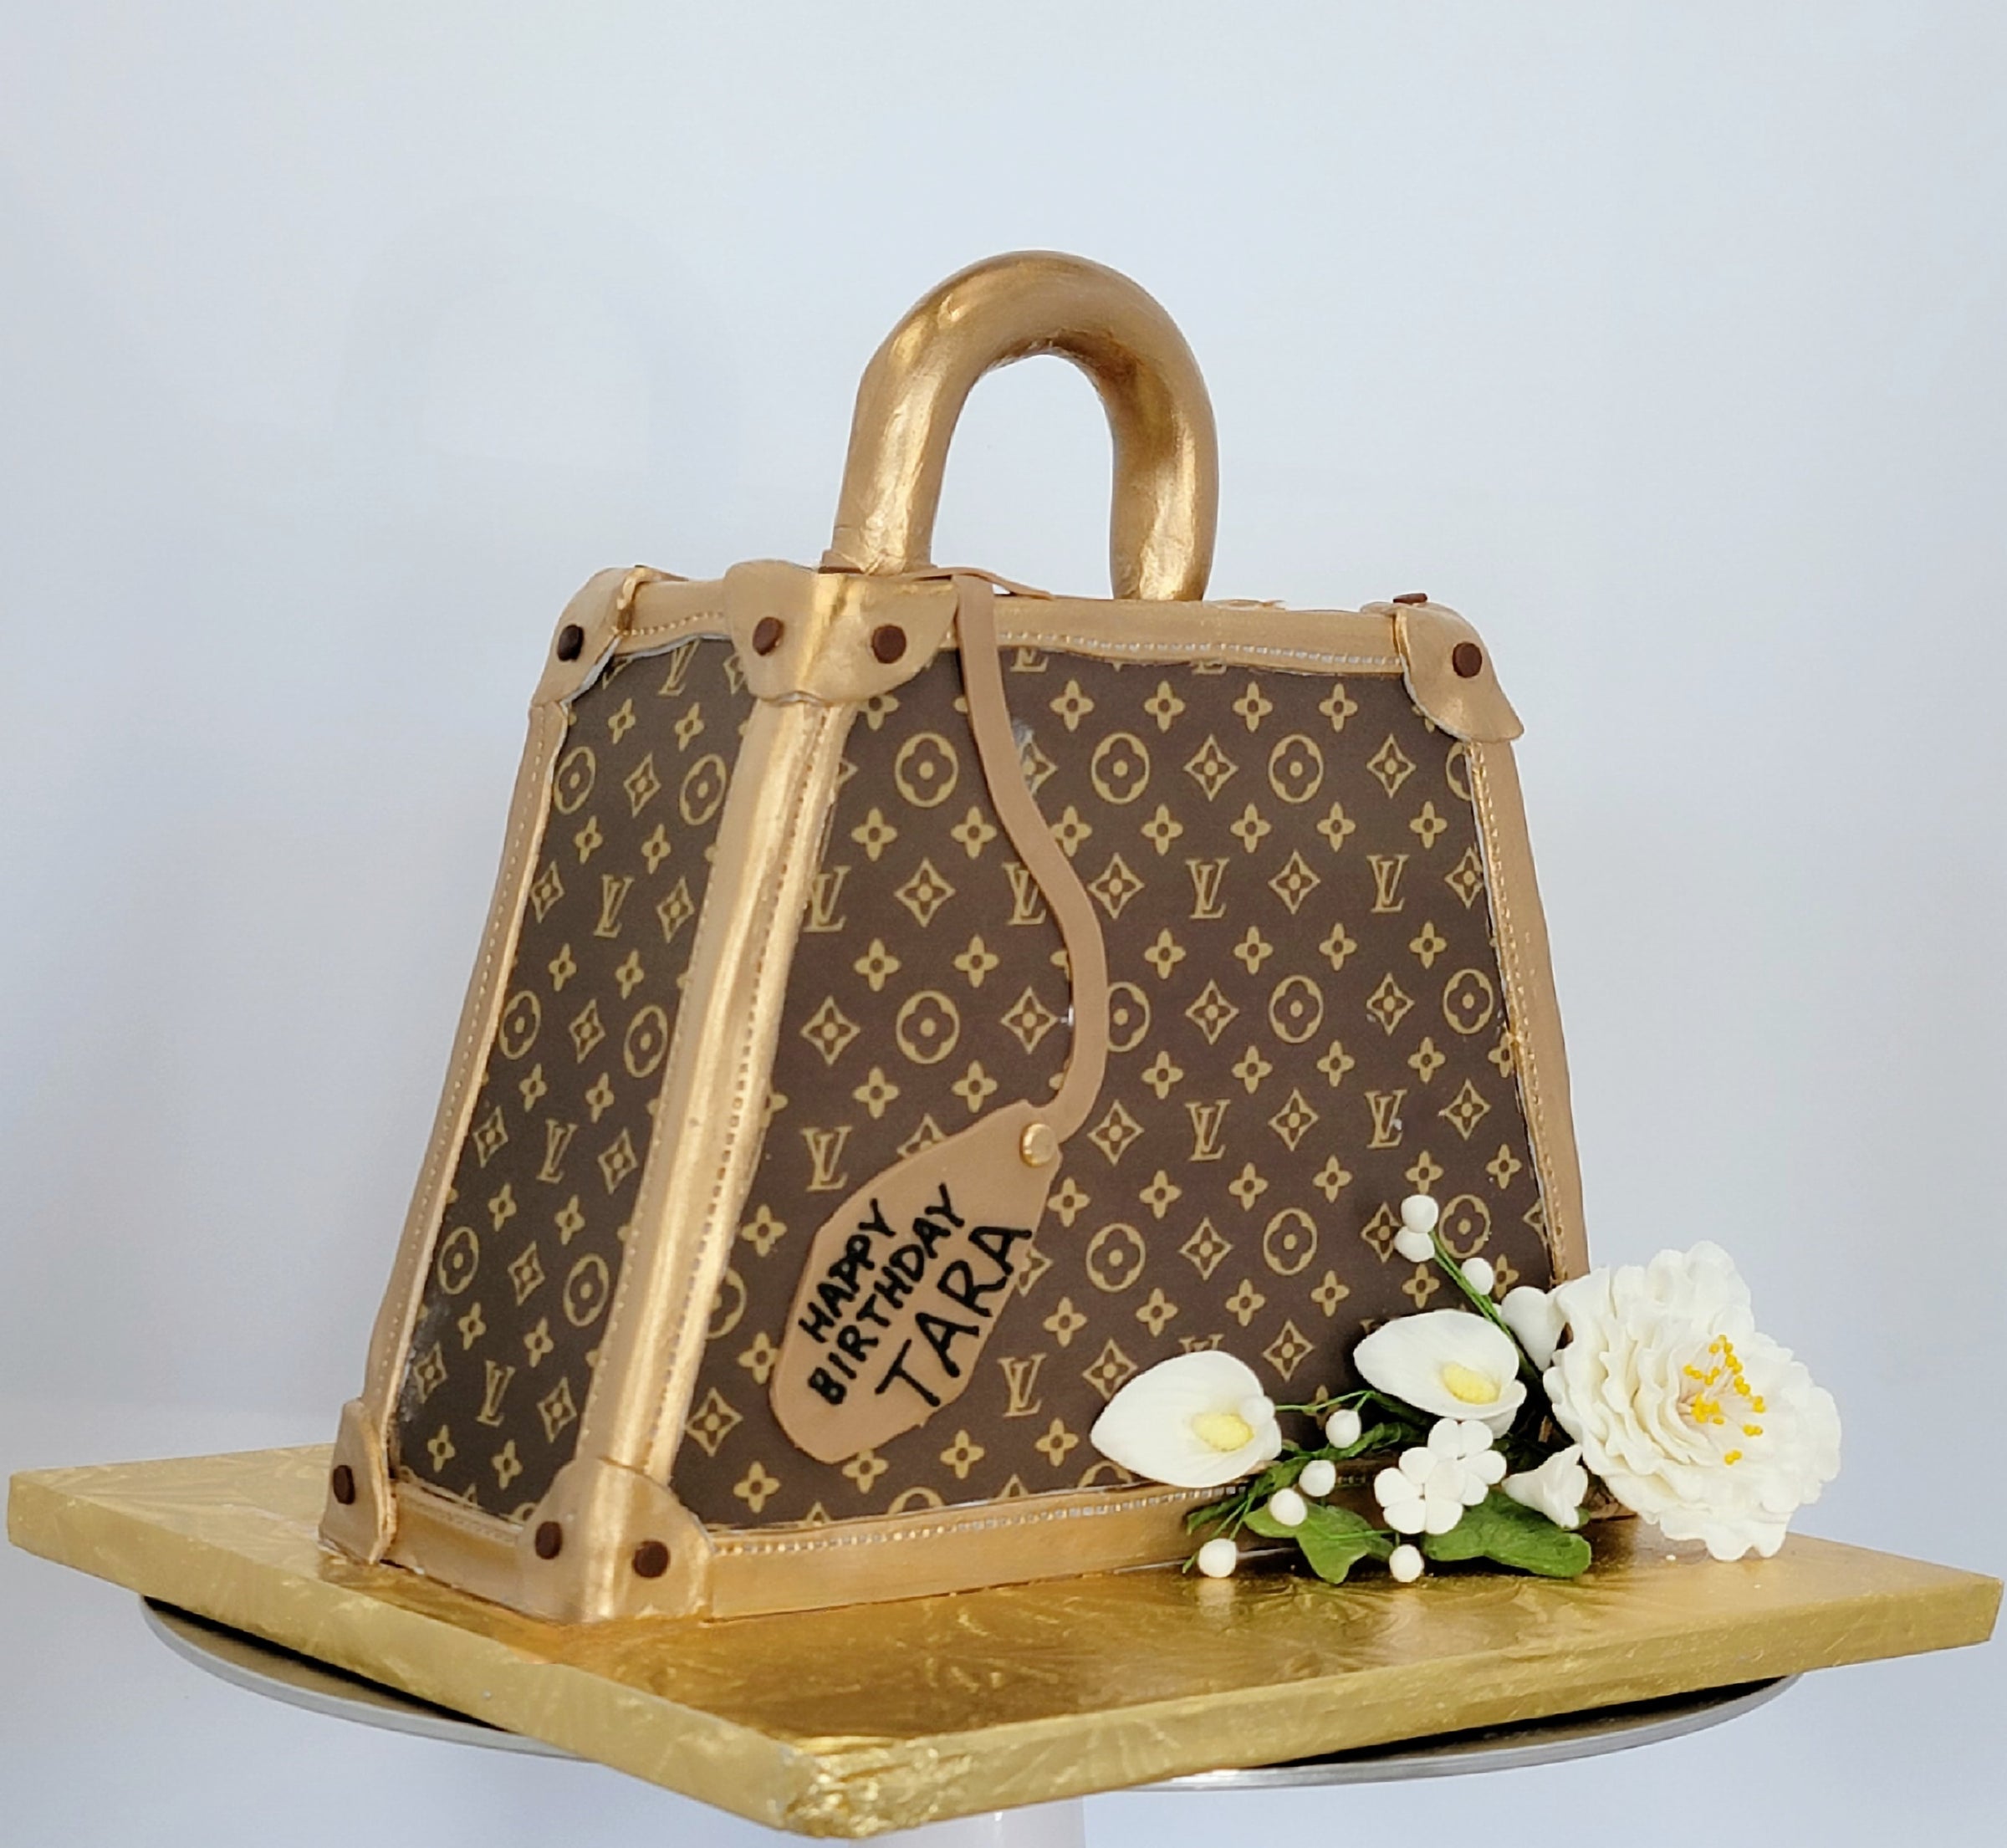 Louie Vuitton Themed Birthday Cake With Mini Handbags